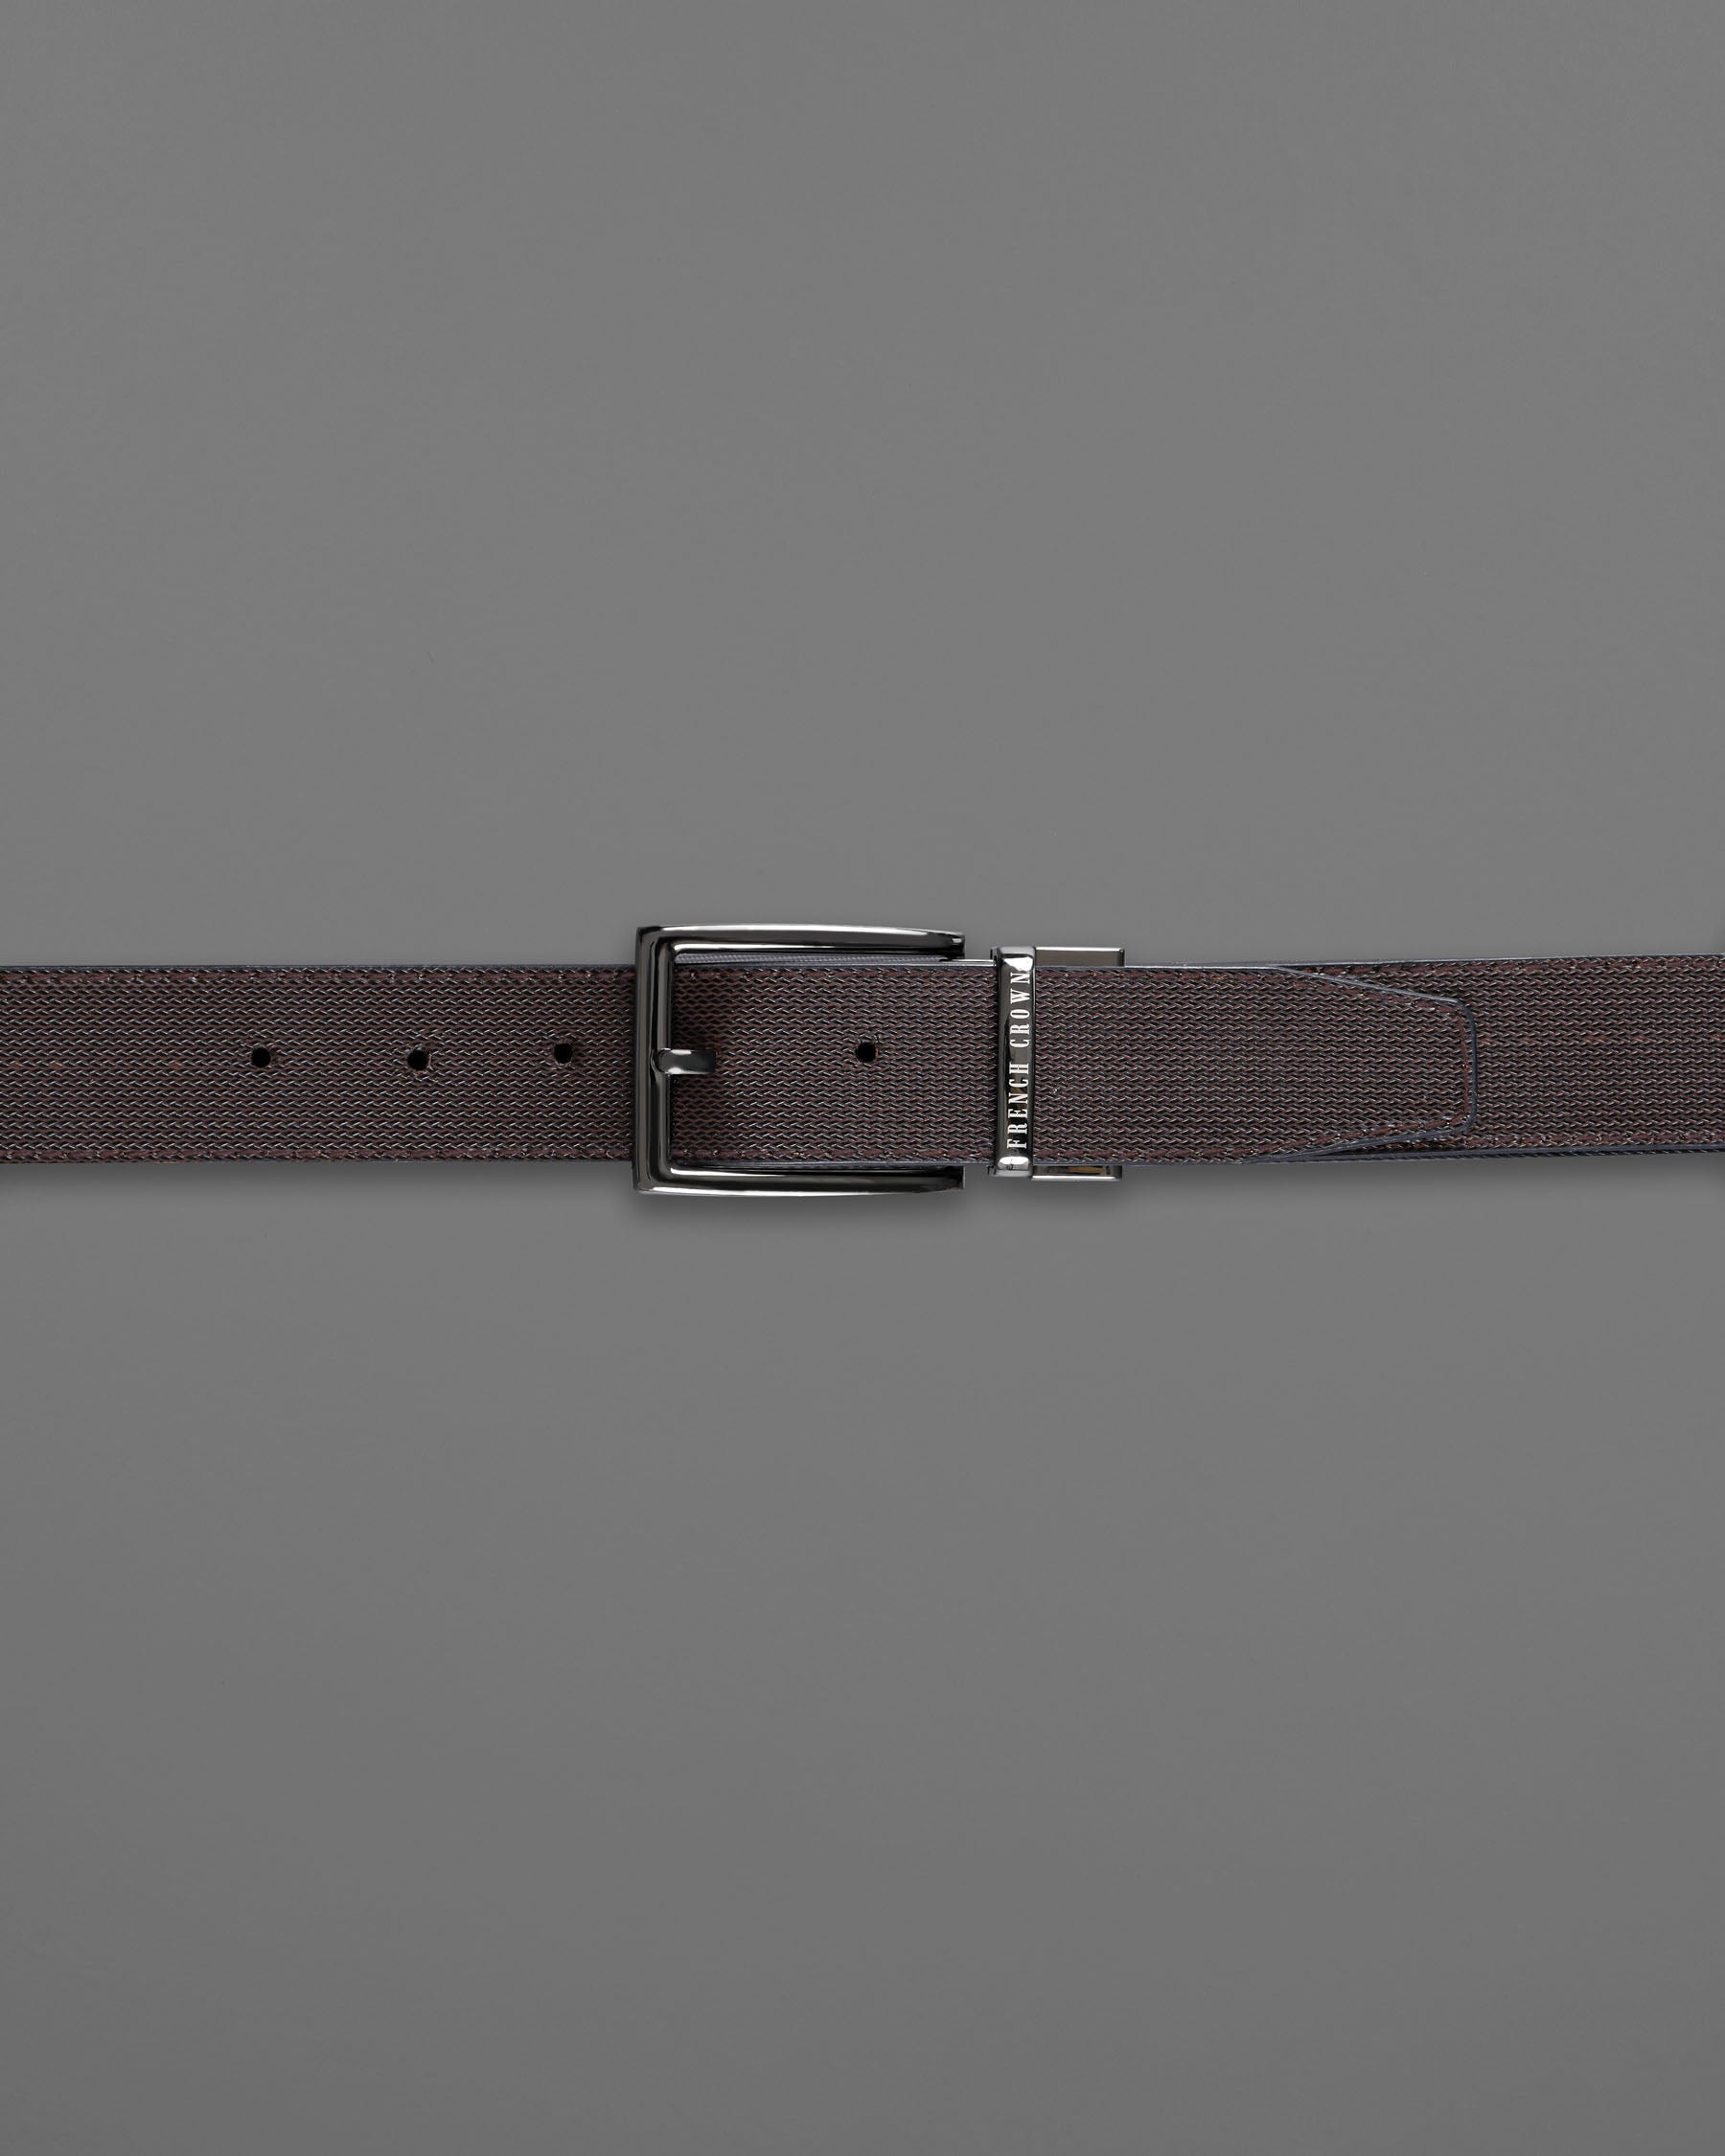 Metallic Gray Buckle with Jade Black and Light Brown Leather Free Handcrafted Reversible Belt BT084-28, BT084-30, BT084-32, BT084-34, BT084-36, BT084-38